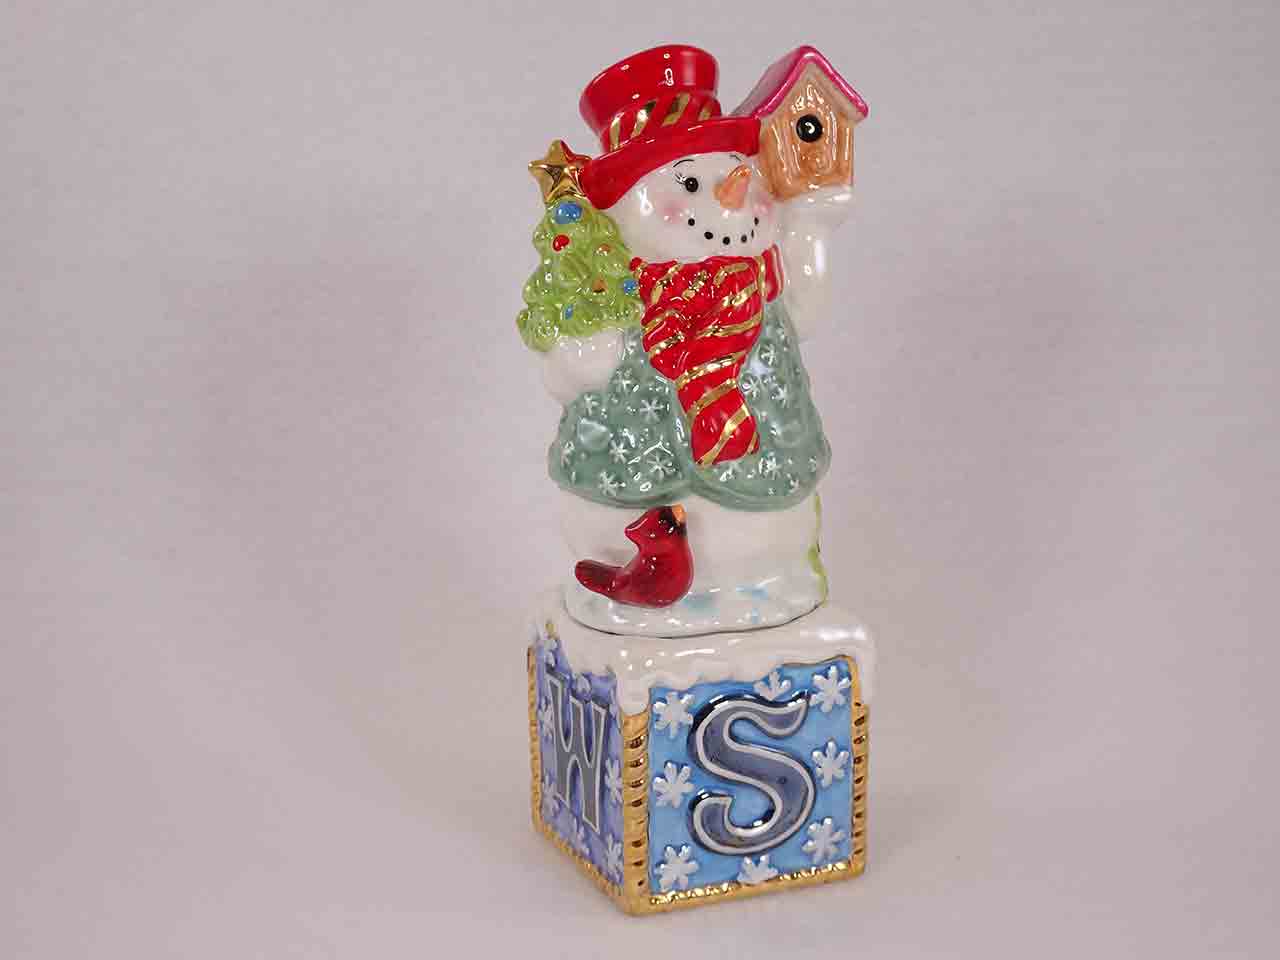 Christopher Radko Christmas sets on toy blocks salt and pepper shakers - snowman